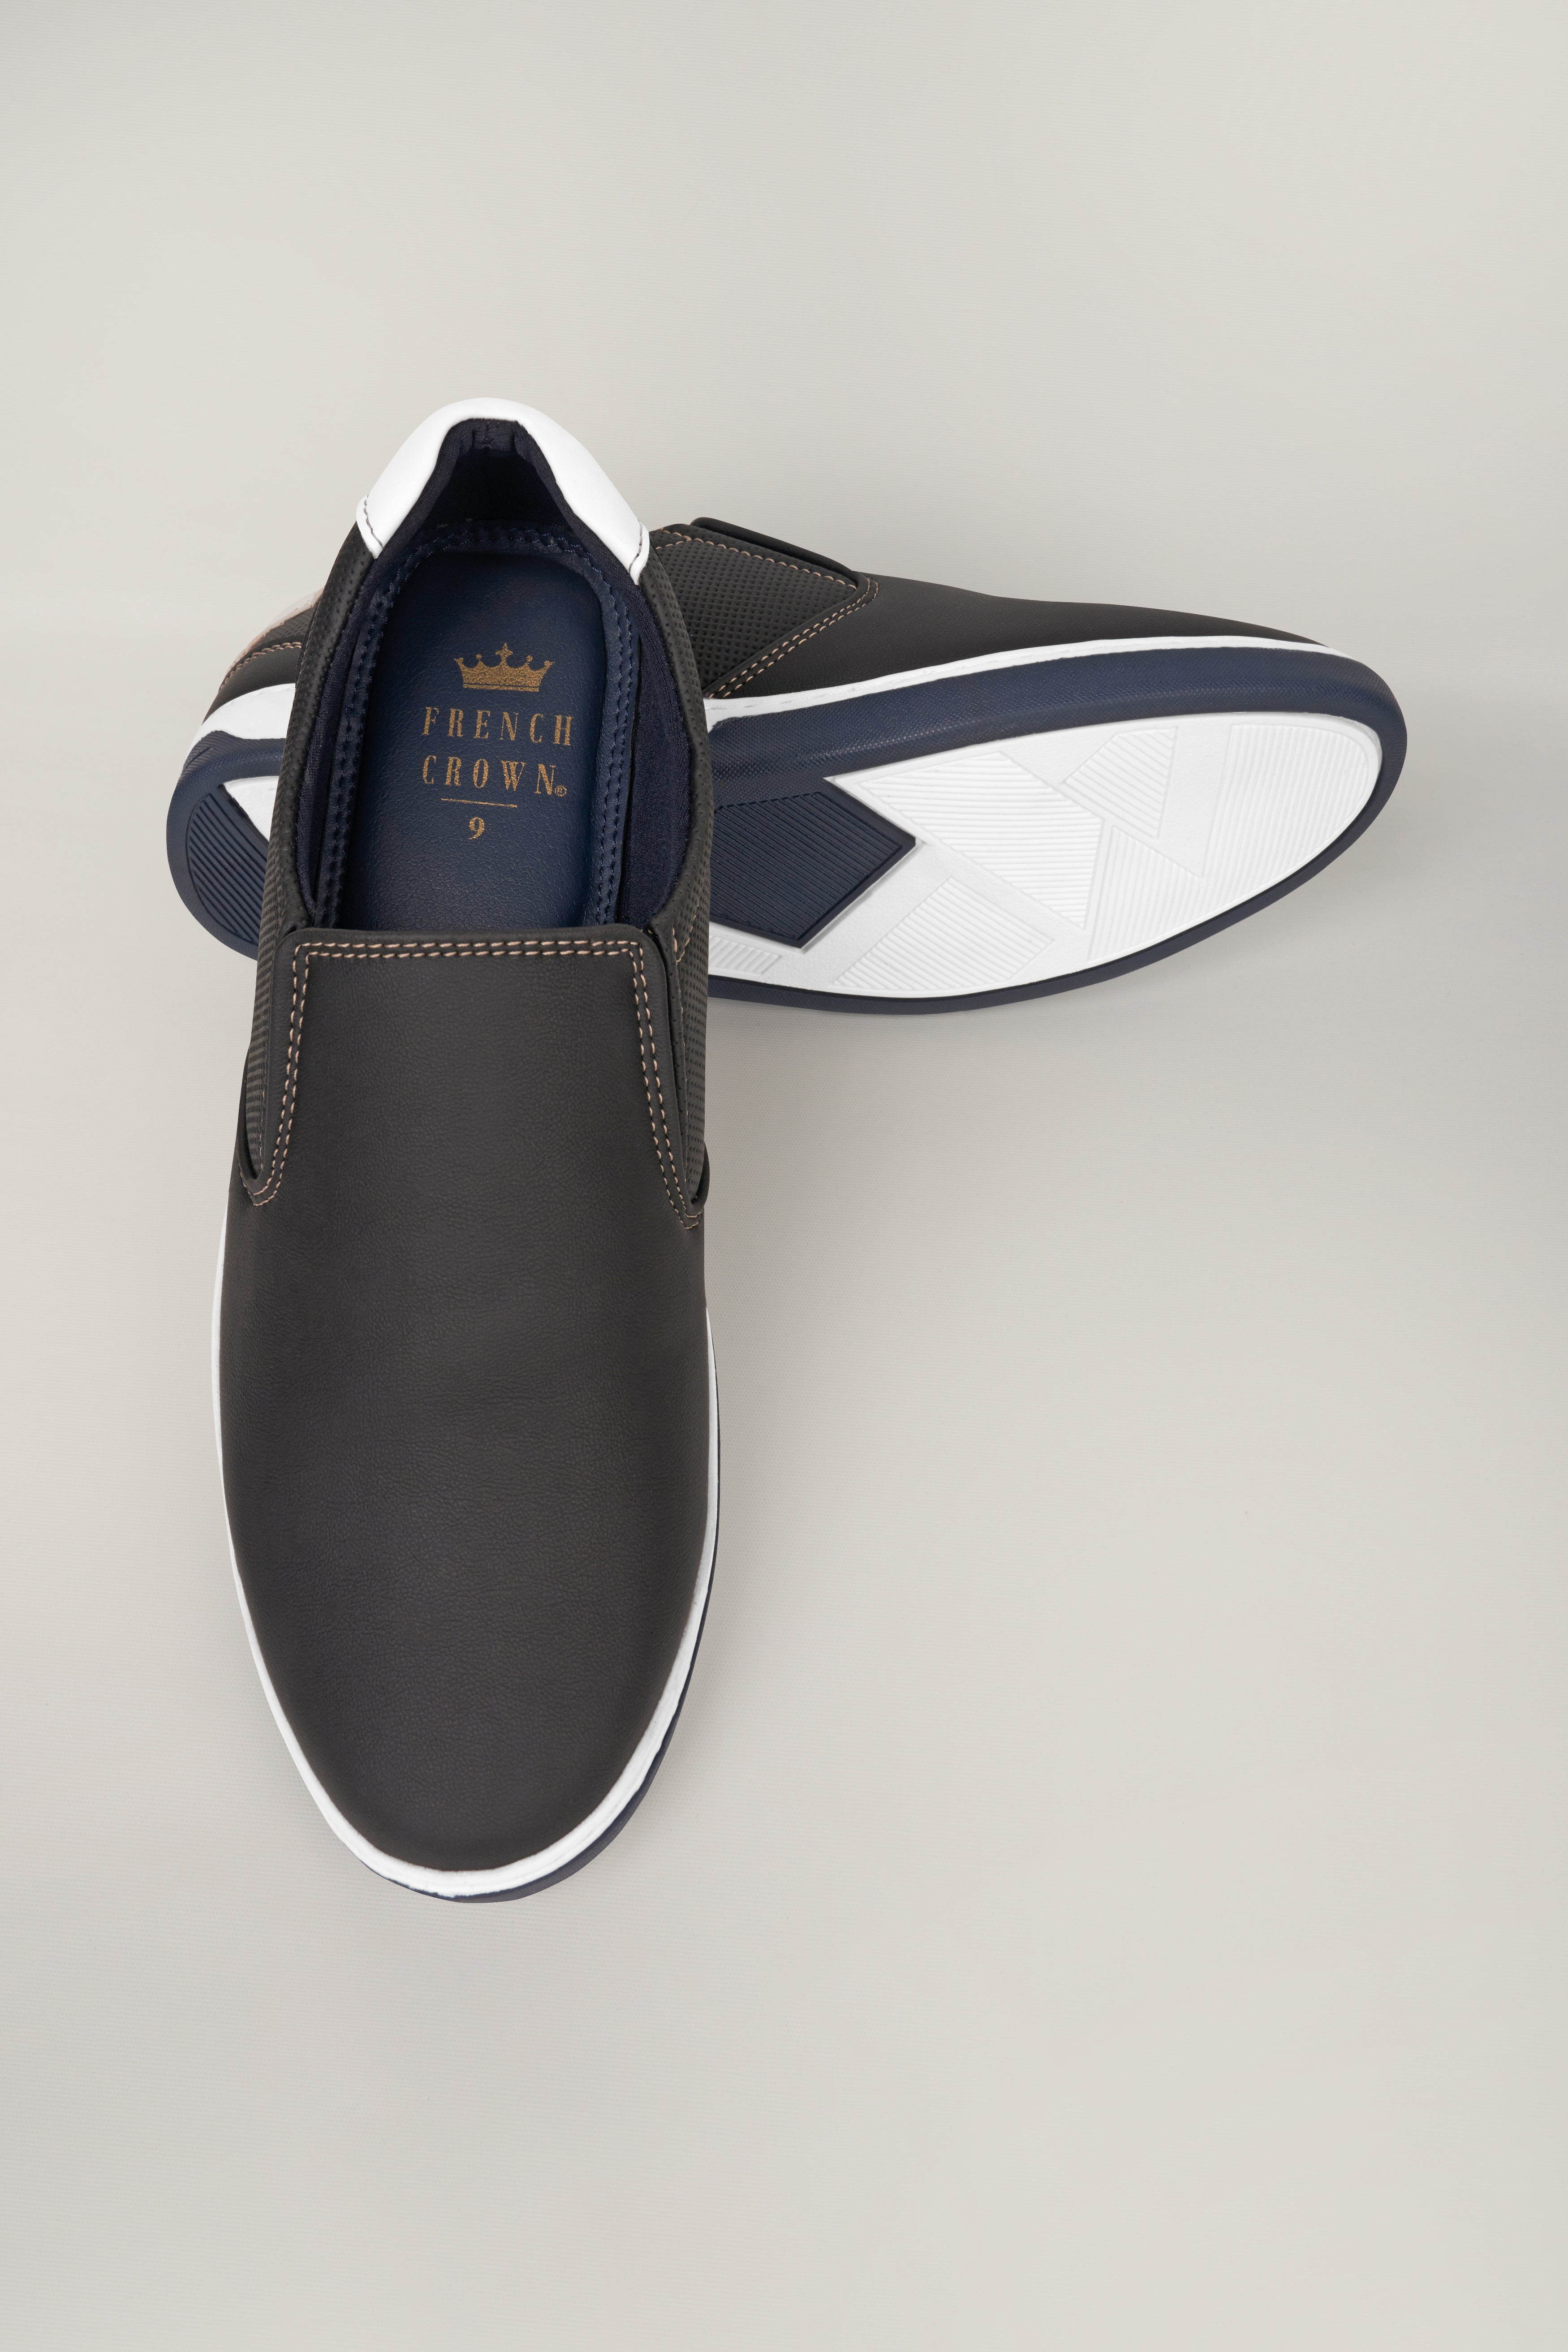 Dark Gray Vegan Leather Smart Casual Shoes FT121-6, FT121-7, FT121-8, FT121-9, FT121-10, FT121-11